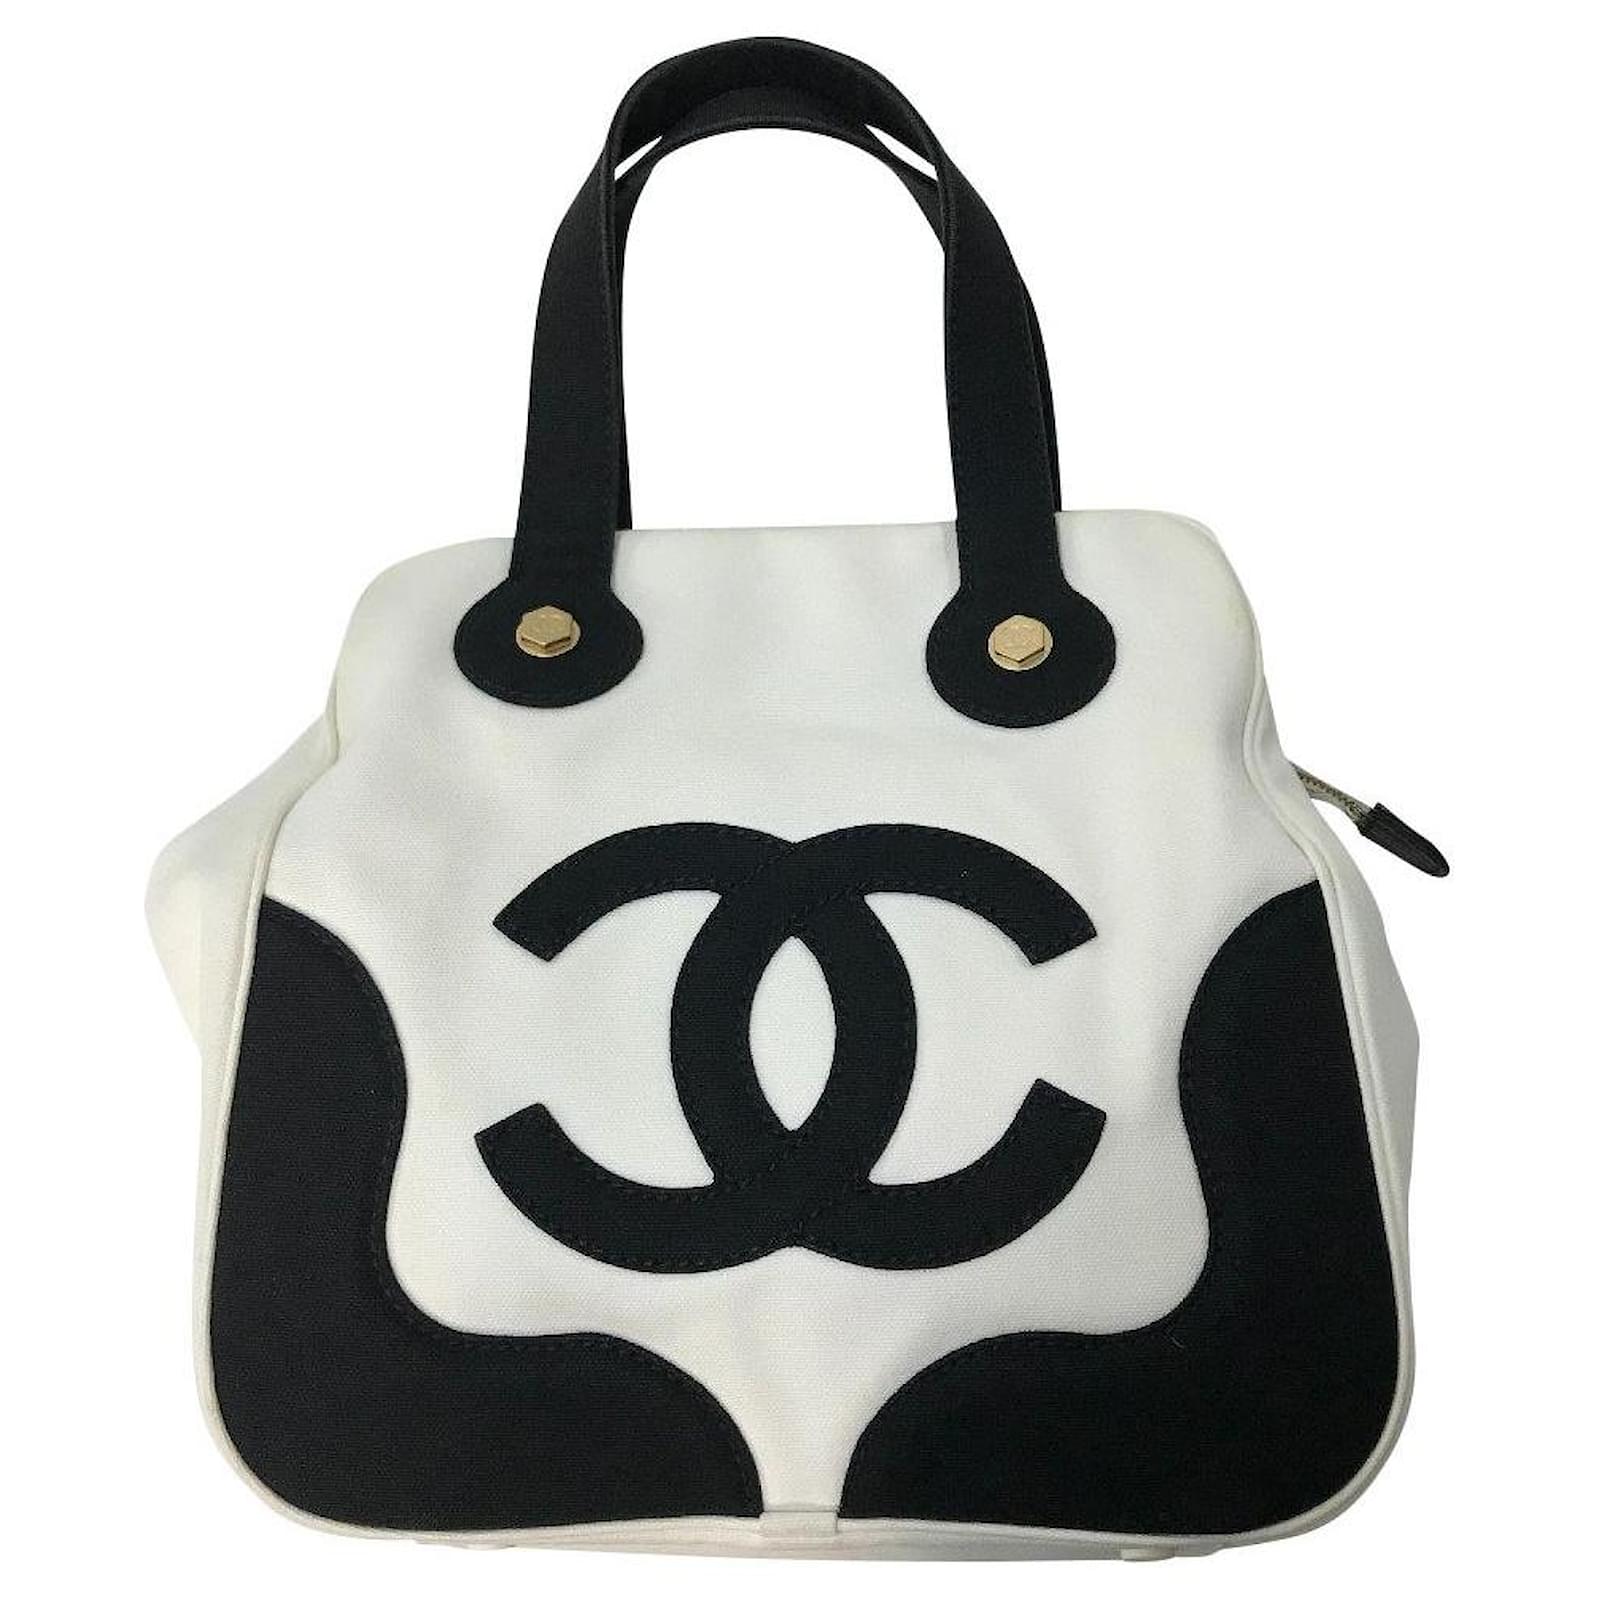 coco chanel black leather handbag used